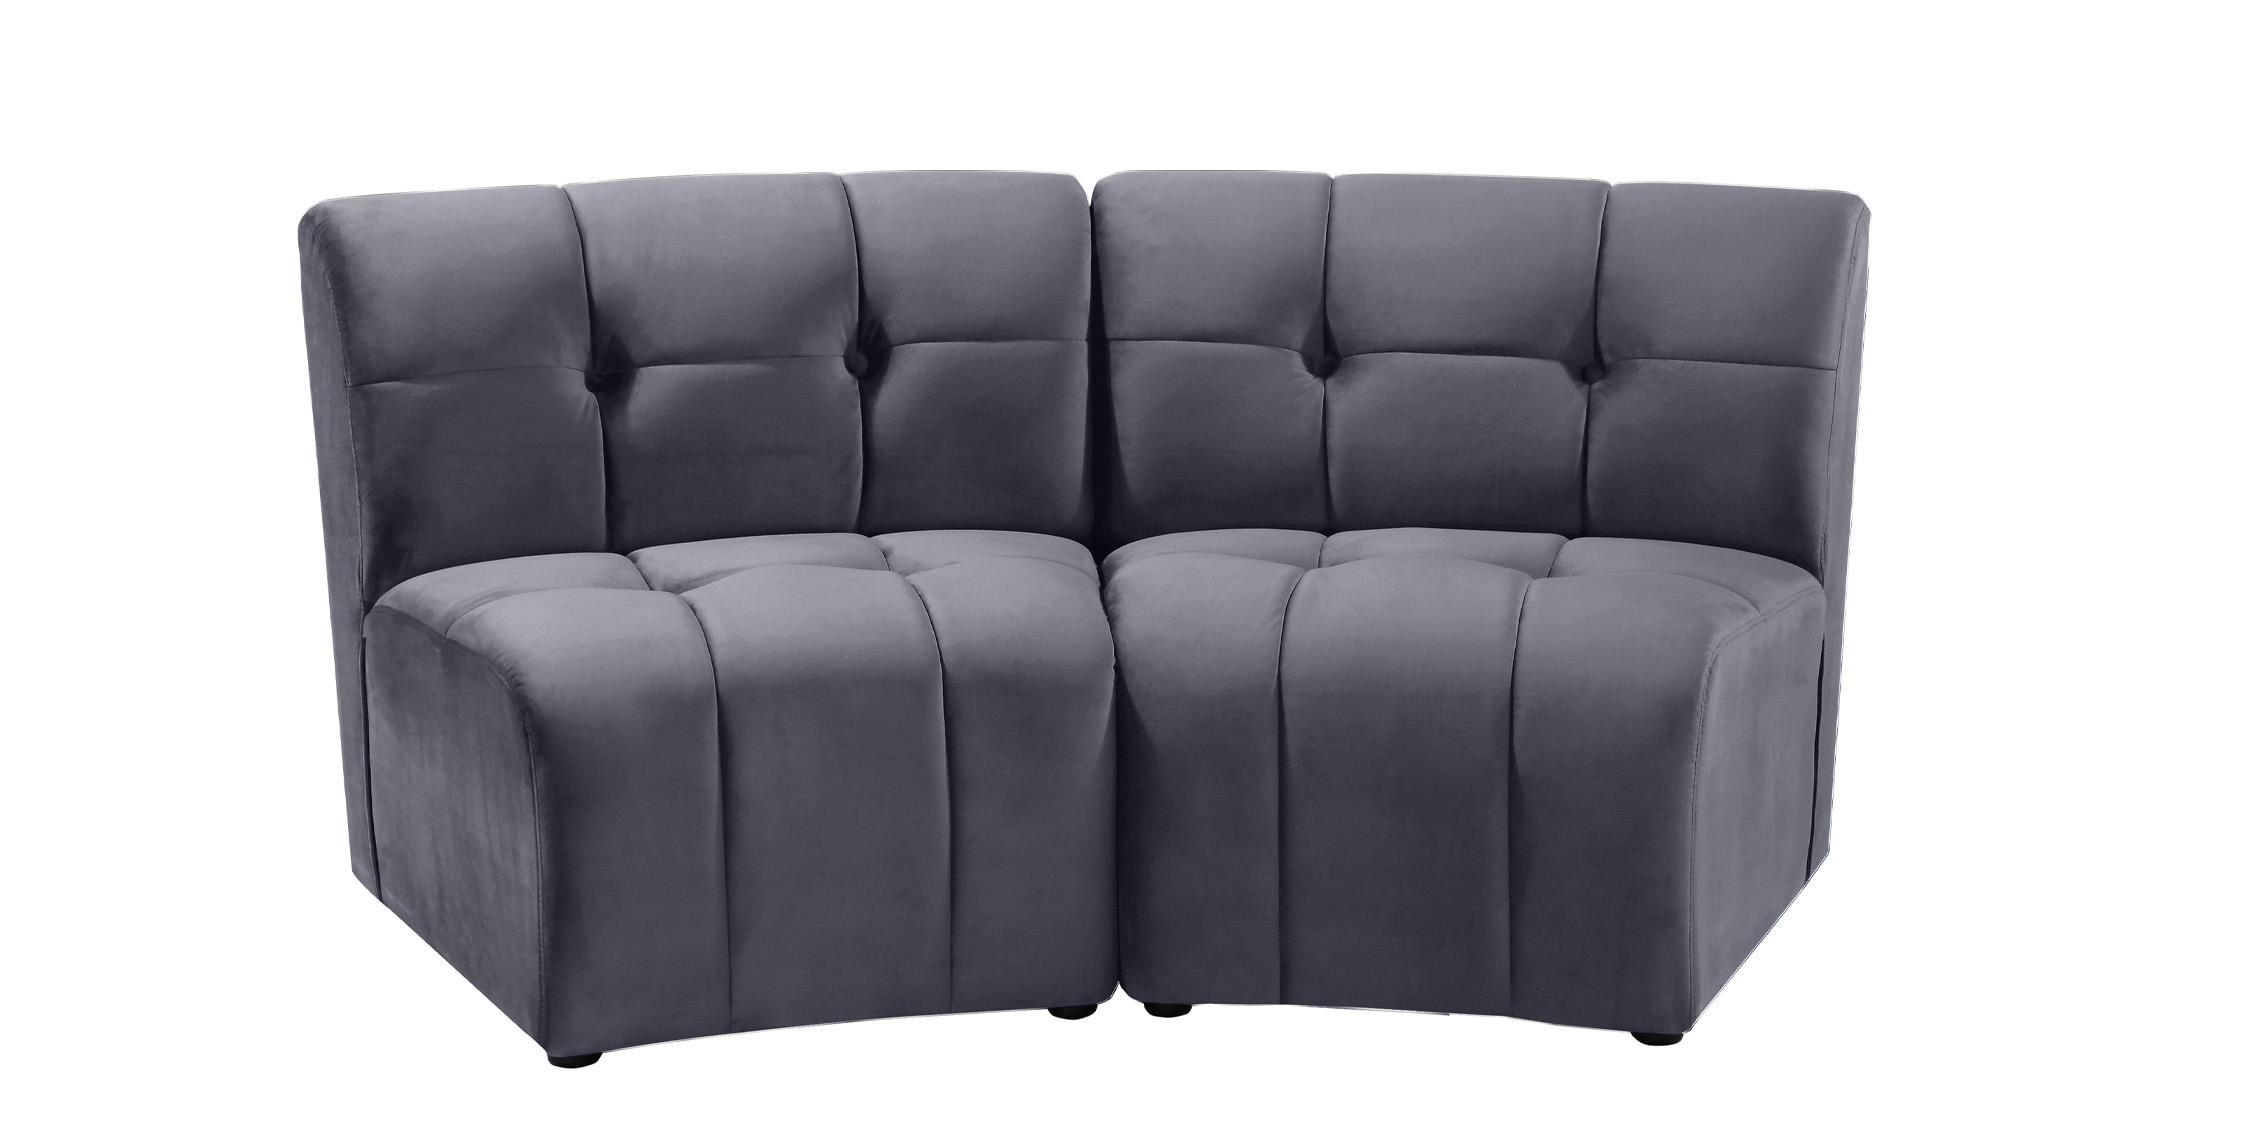 Contemporary, Modern Modular Sectional Sofa LIMITLESS 645Grey-2PC 645Grey-2PC in Gray Velvet